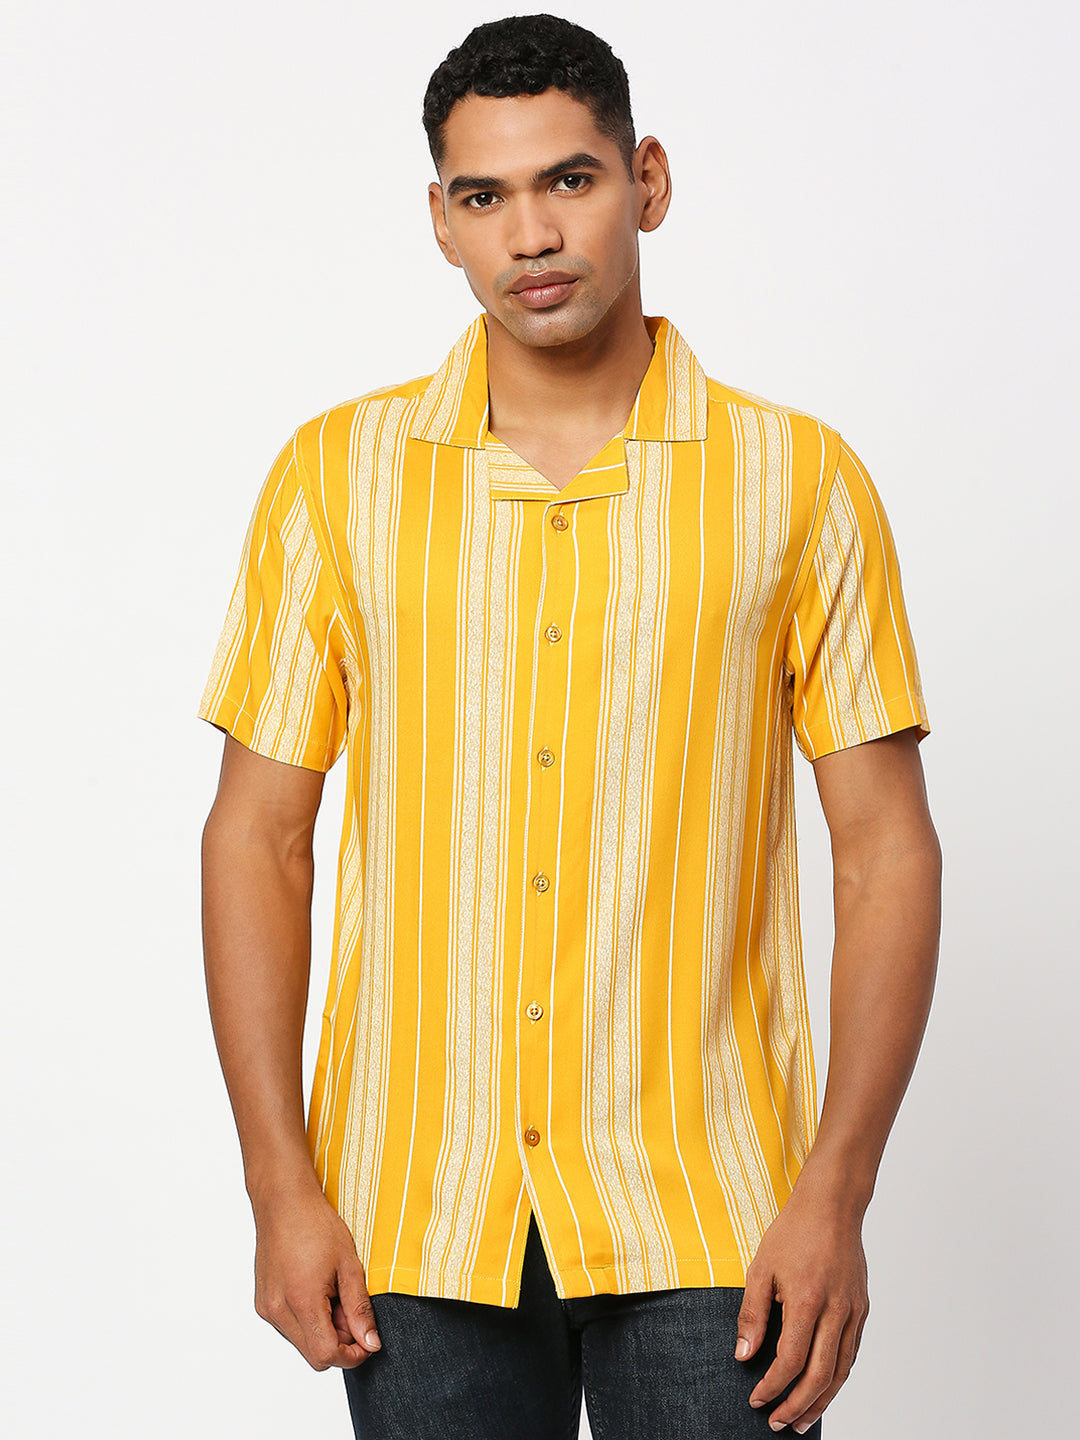 Sincerity Stripes Yellow Shirt